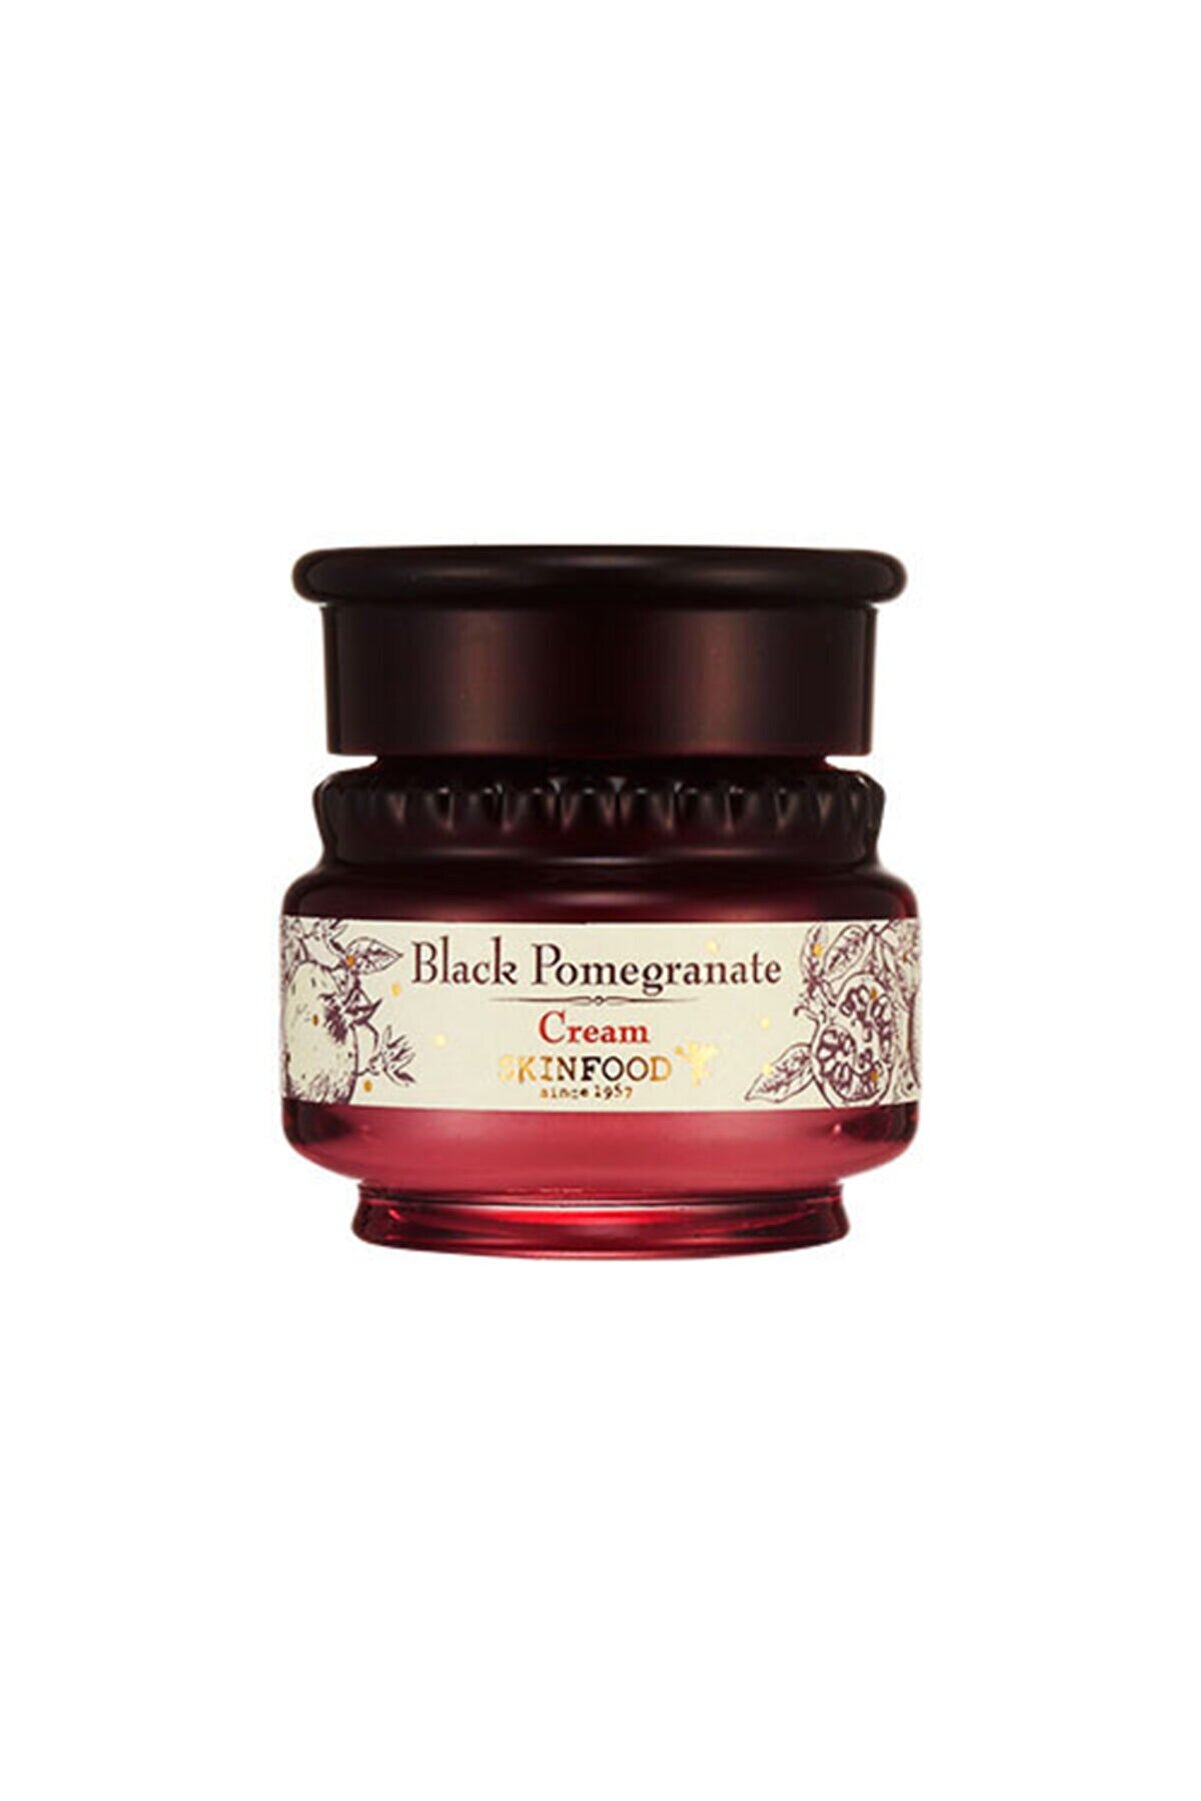 Skinfood Black Pomegranate Kırışıklık Önleyici Krem 50g